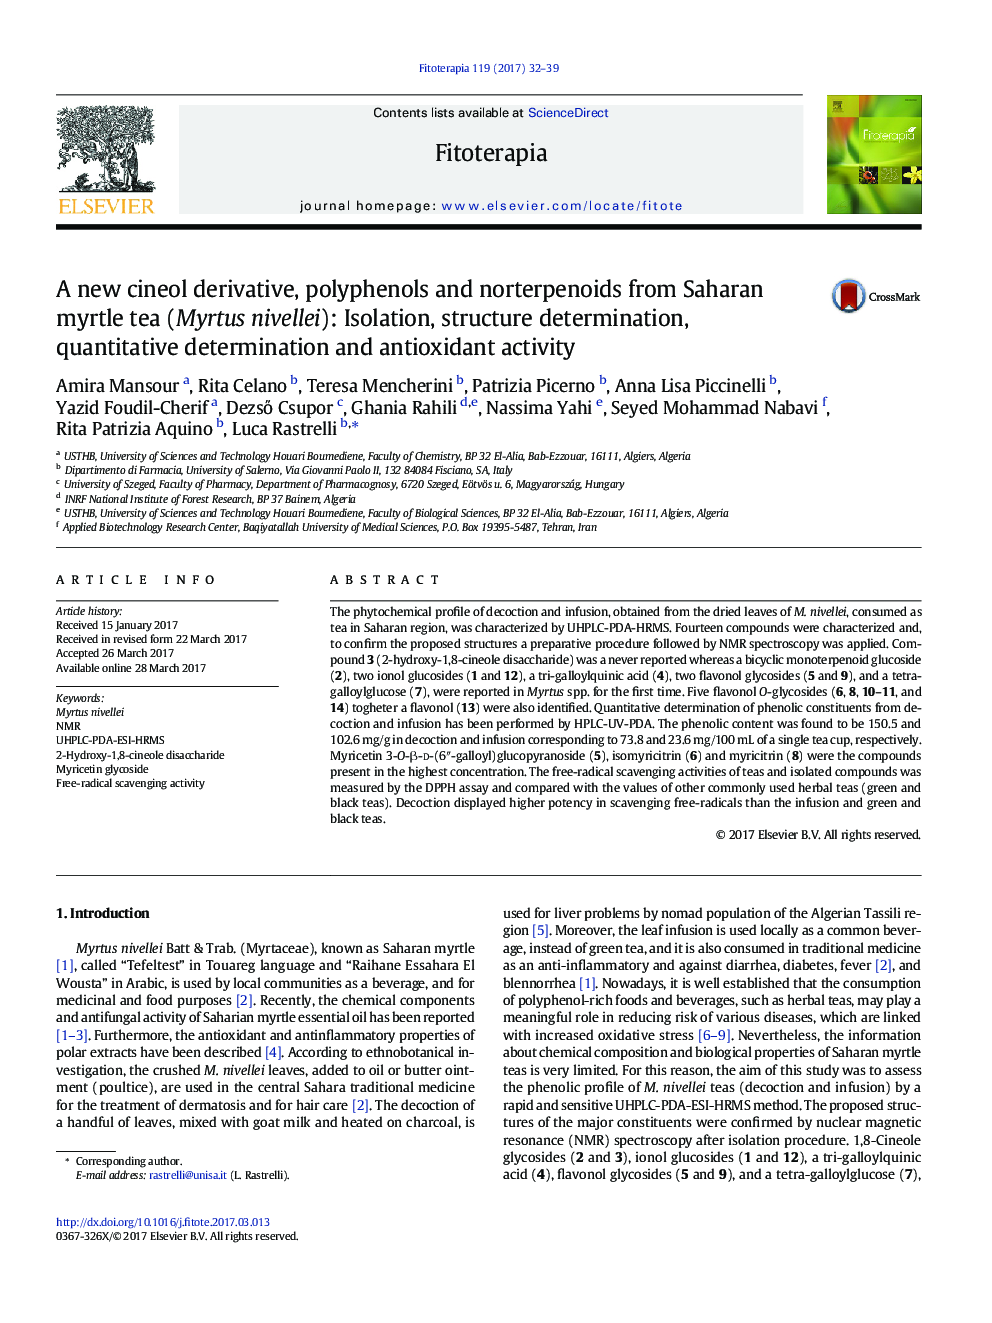 A new cineol derivative, polyphenols and norterpenoids from Saharan myrtle tea (Myrtus nivellei): Isolation, structure determination, quantitative determination and antioxidant activity